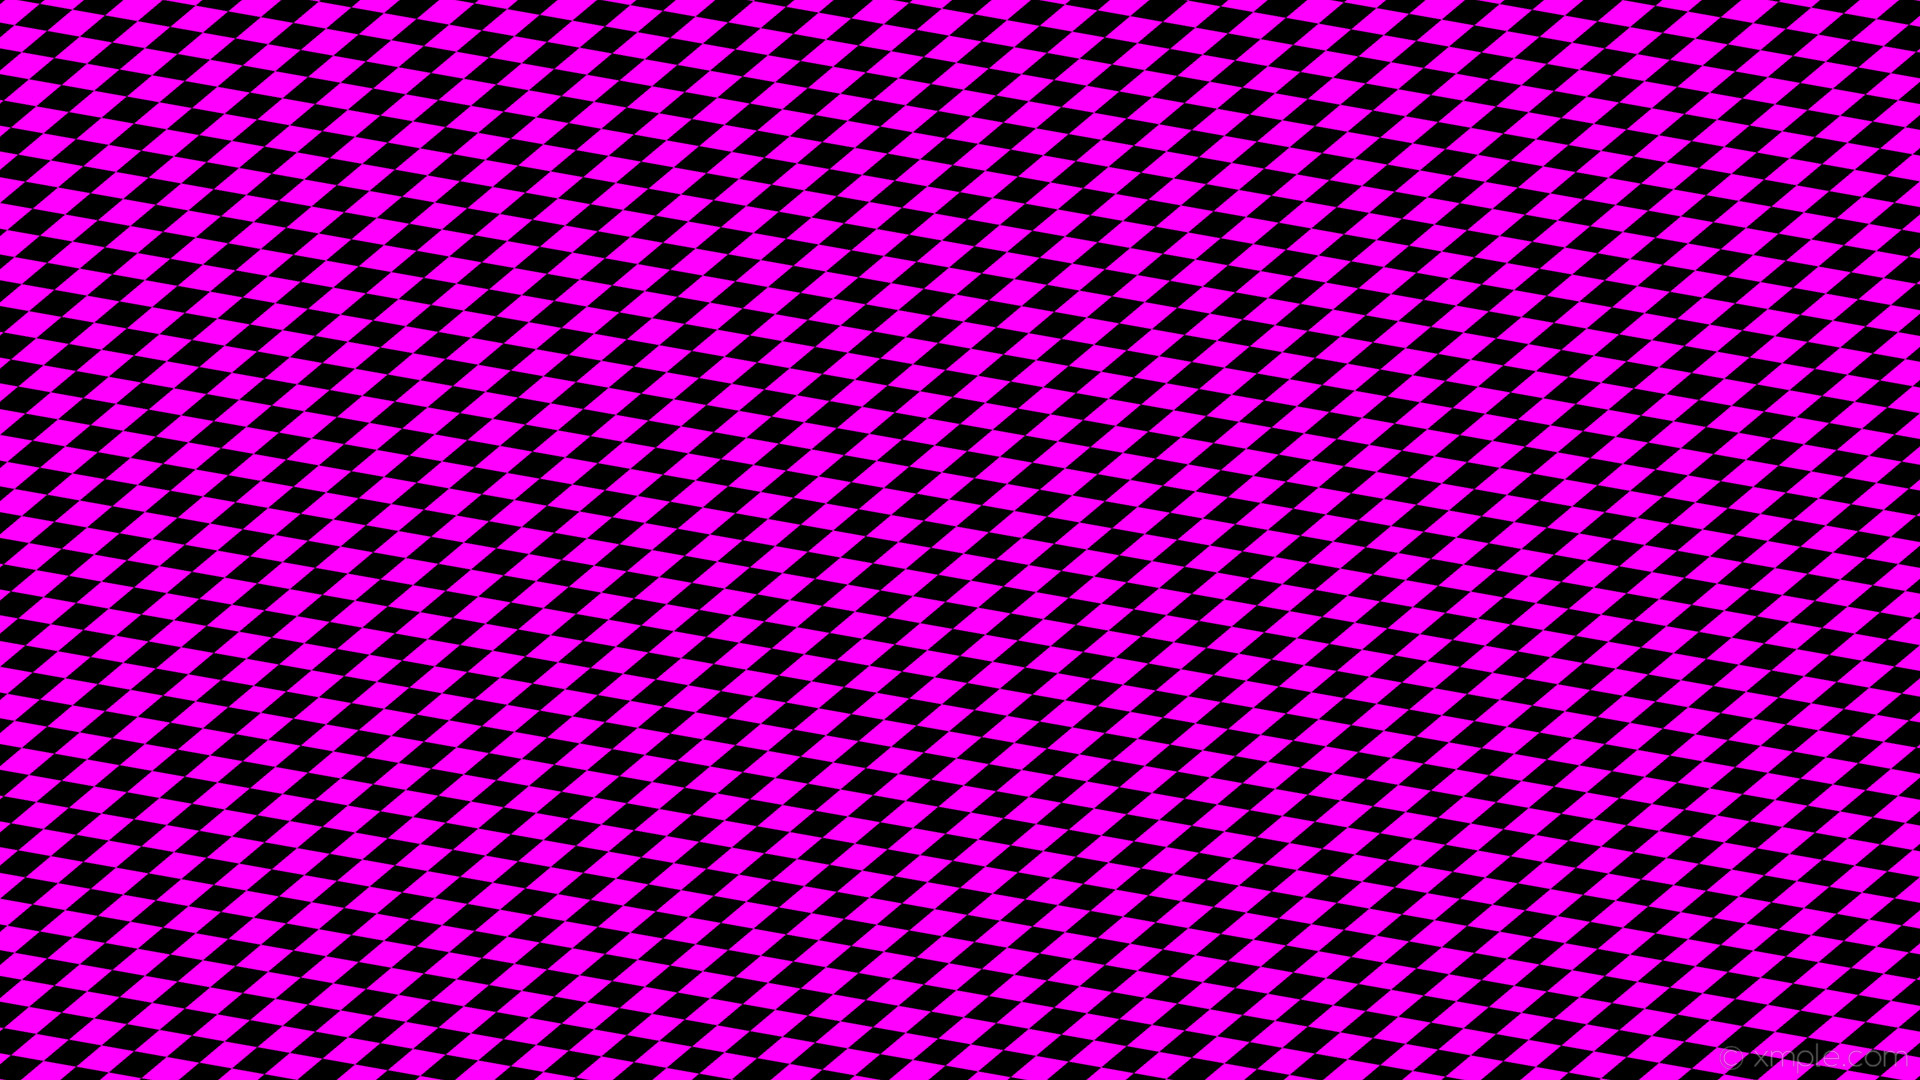 1920x1080 wallpaper purple diamond rhombus black lozenge magenta #ff00ff #000000 15Â°  60px 28px